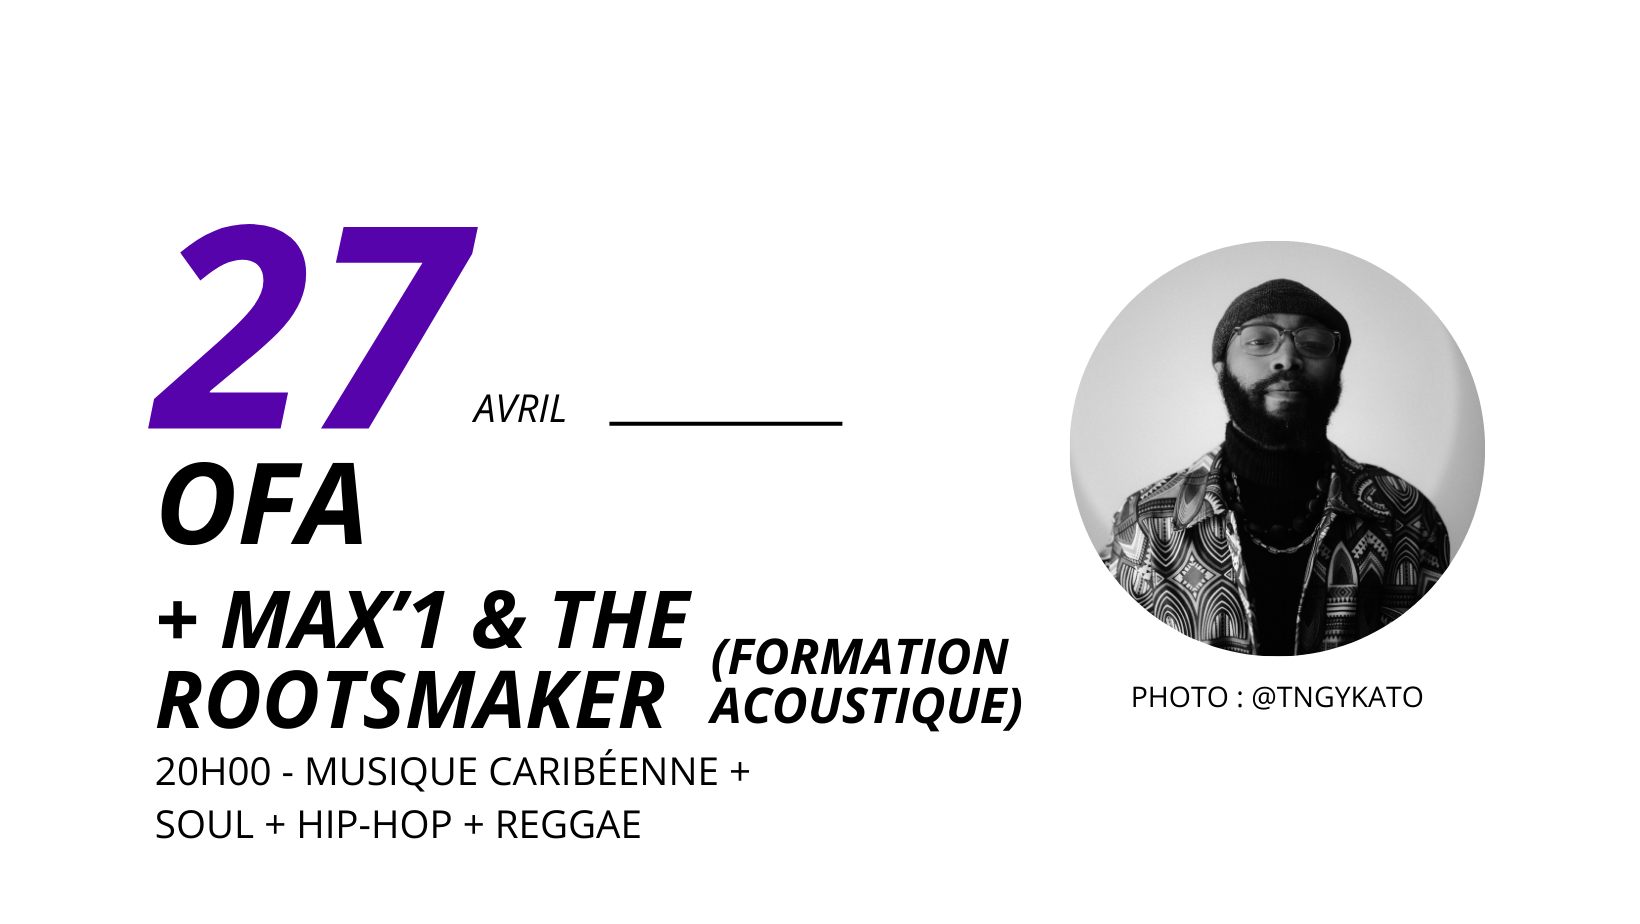 [musique caribéenne + soul + hip-hop + reggae] ofa + max’1 & the rootsmaker (formation acoustique)